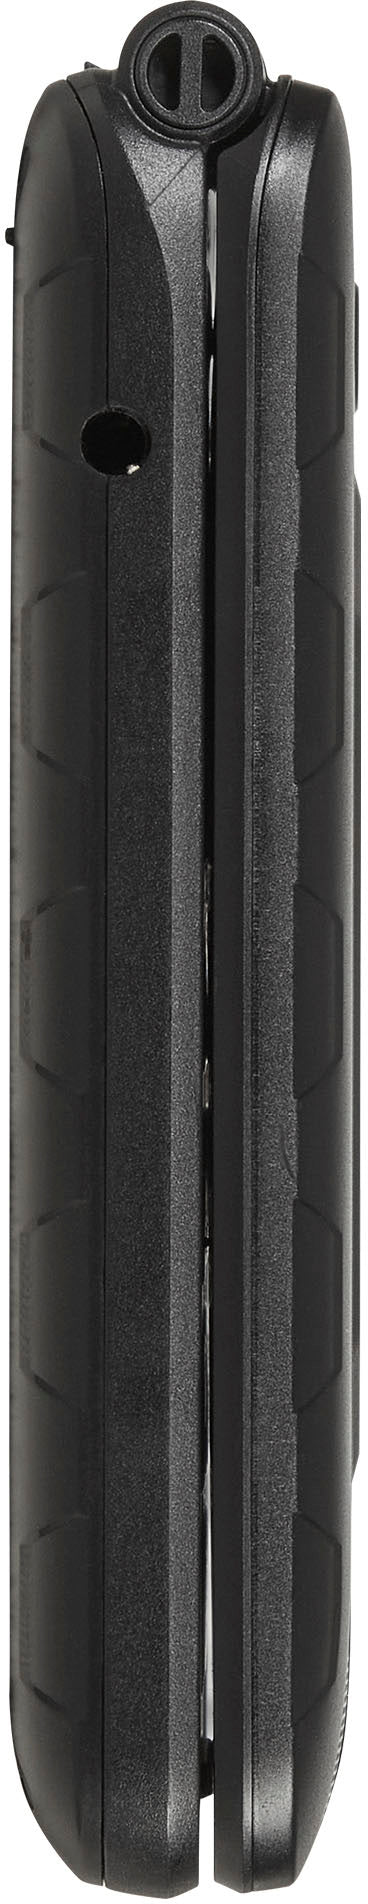 Tracfone - BLU Flex 8GB Prepaid - Black_1